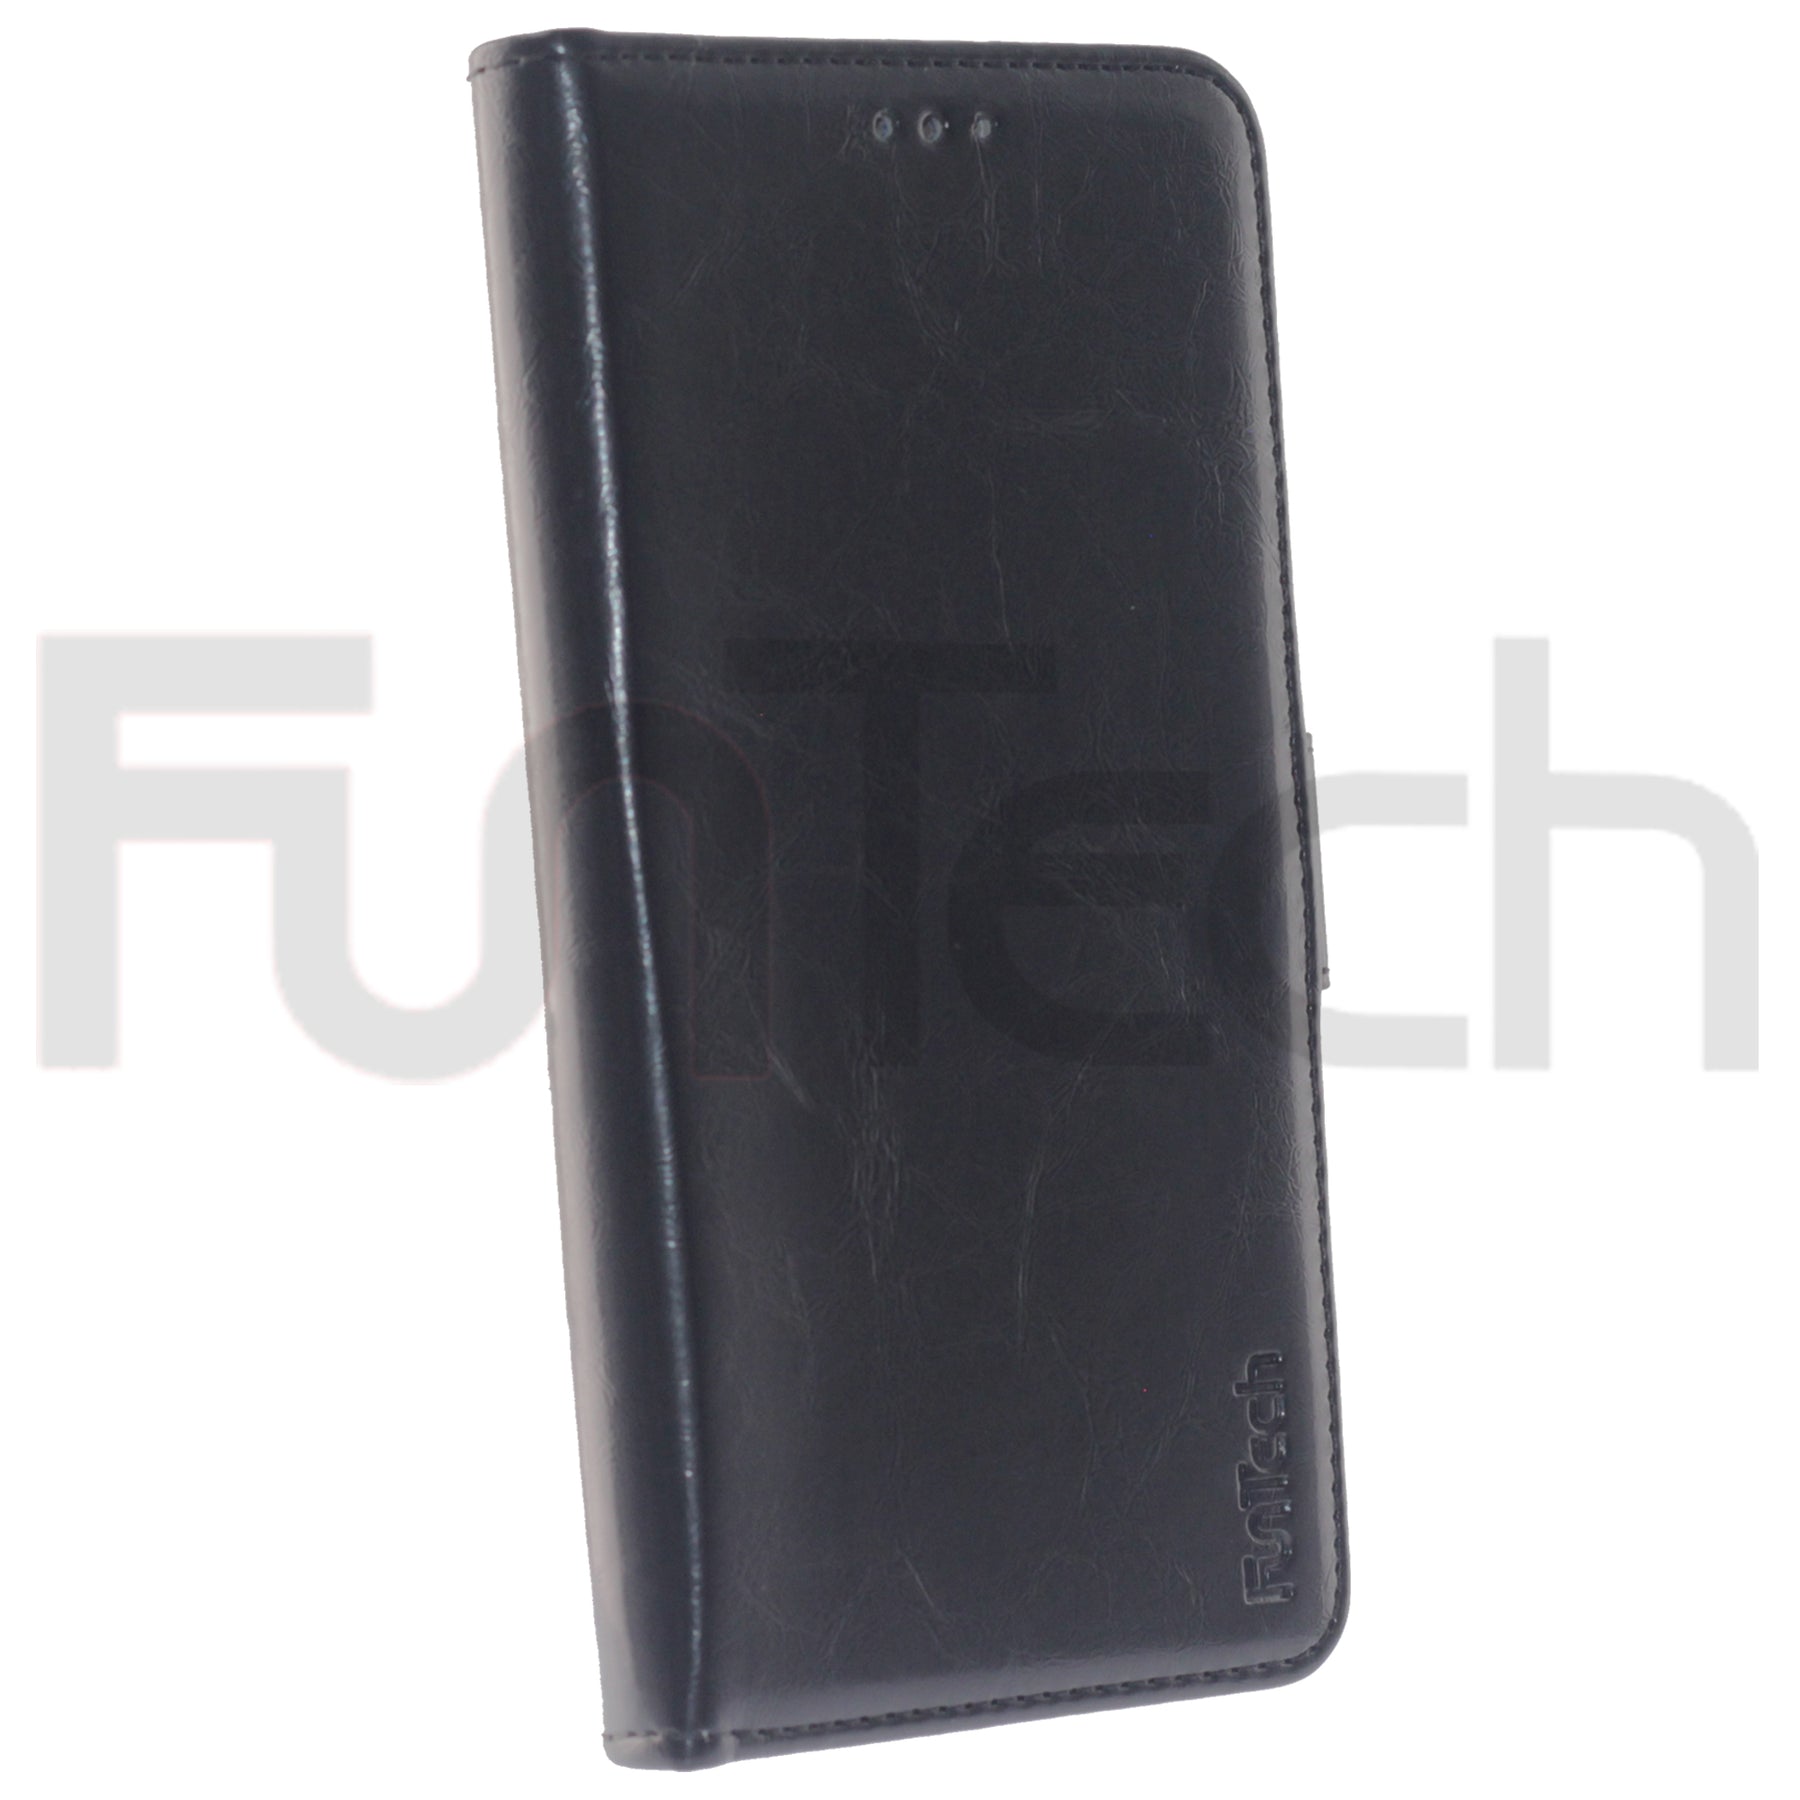 Samsung A5 2017,  Leather Wallet Case, Color Black.